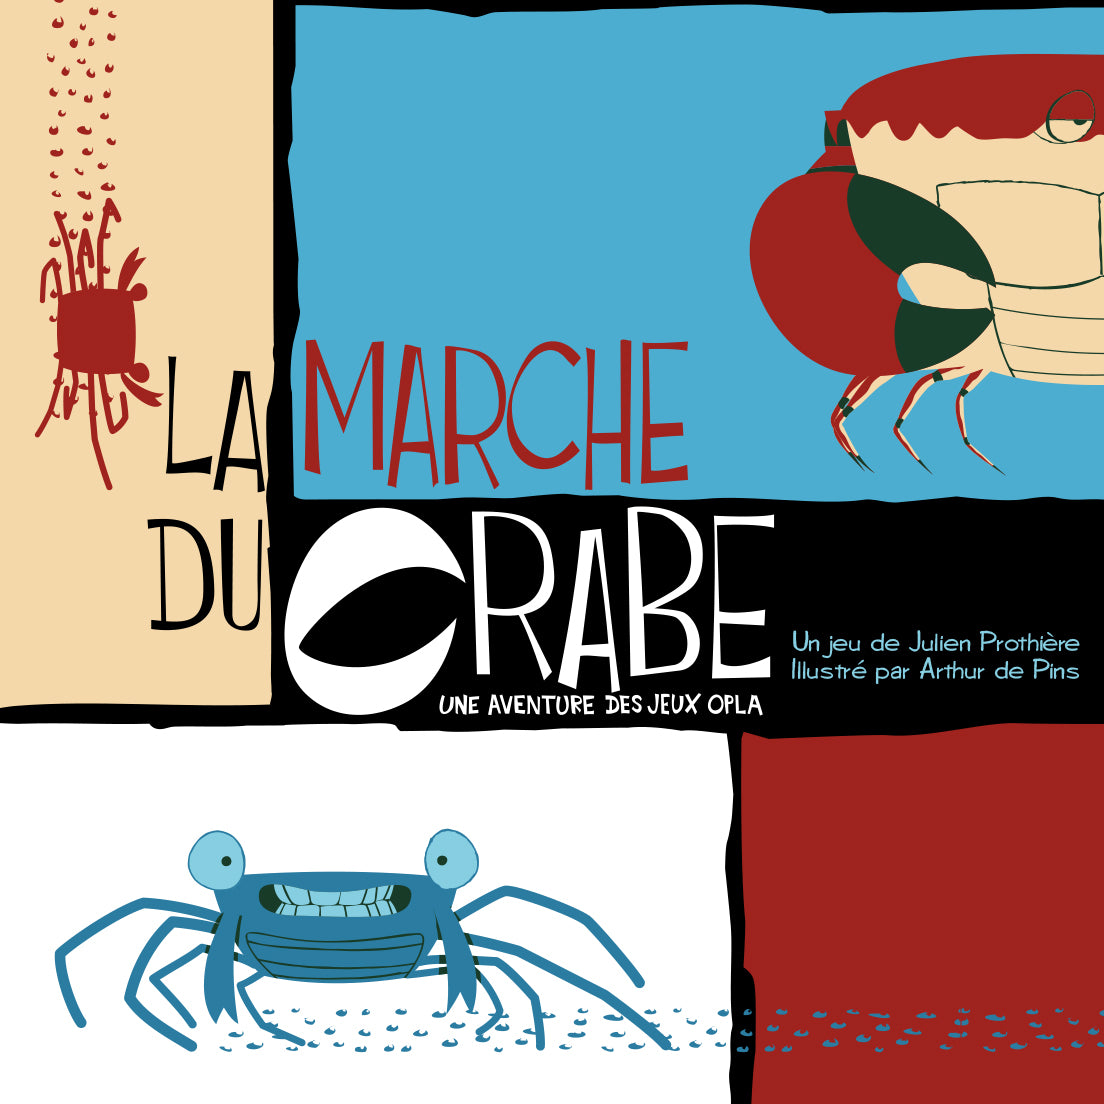 La marche du crabe - Made in France - Jeux Opla